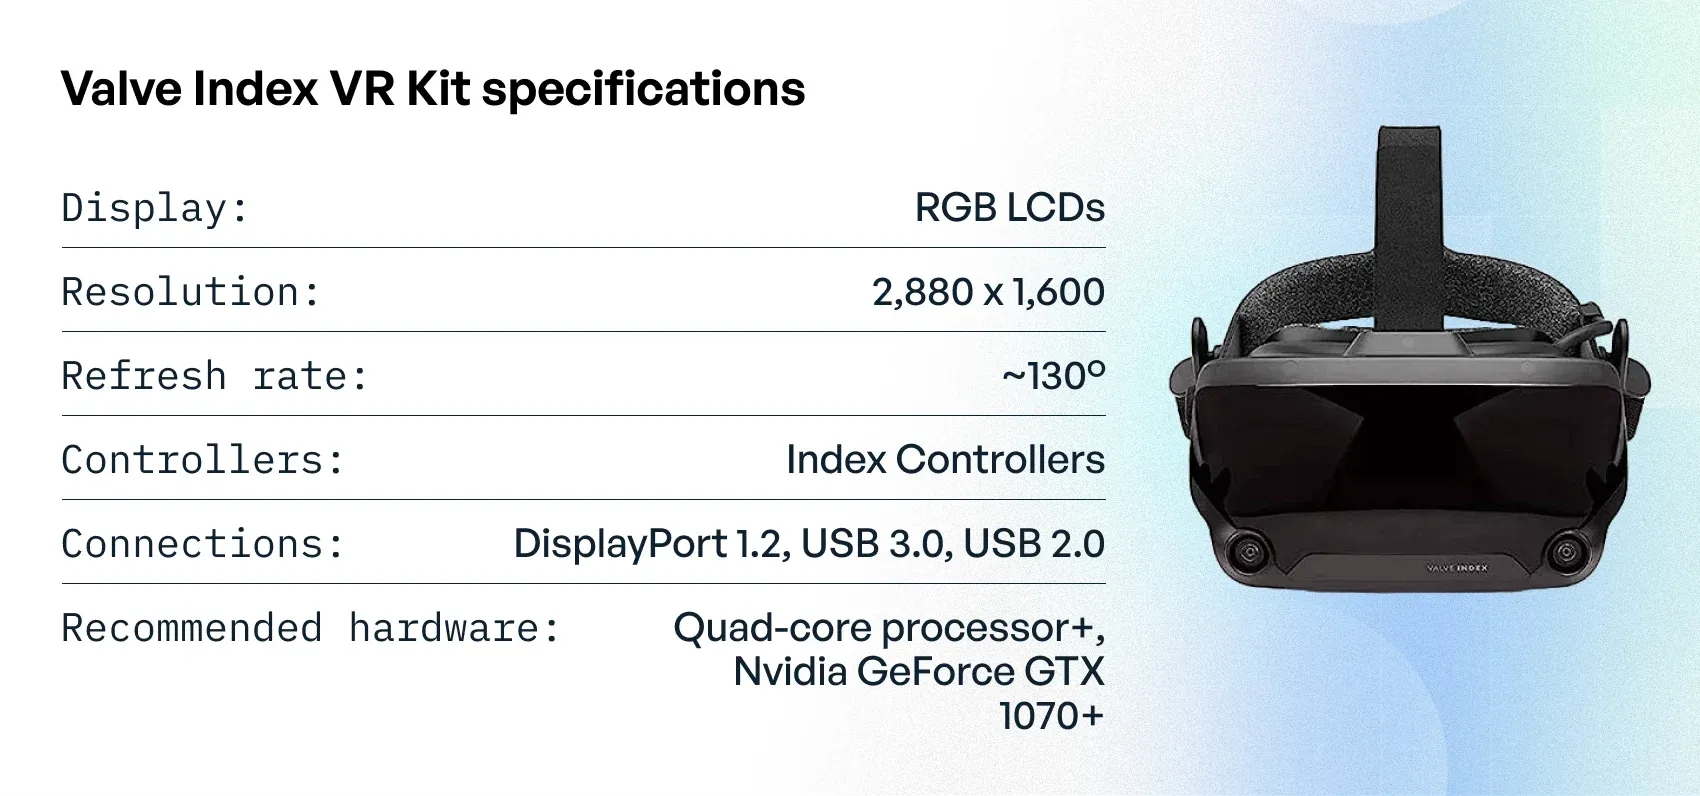 Valve Index VR Kit specifications